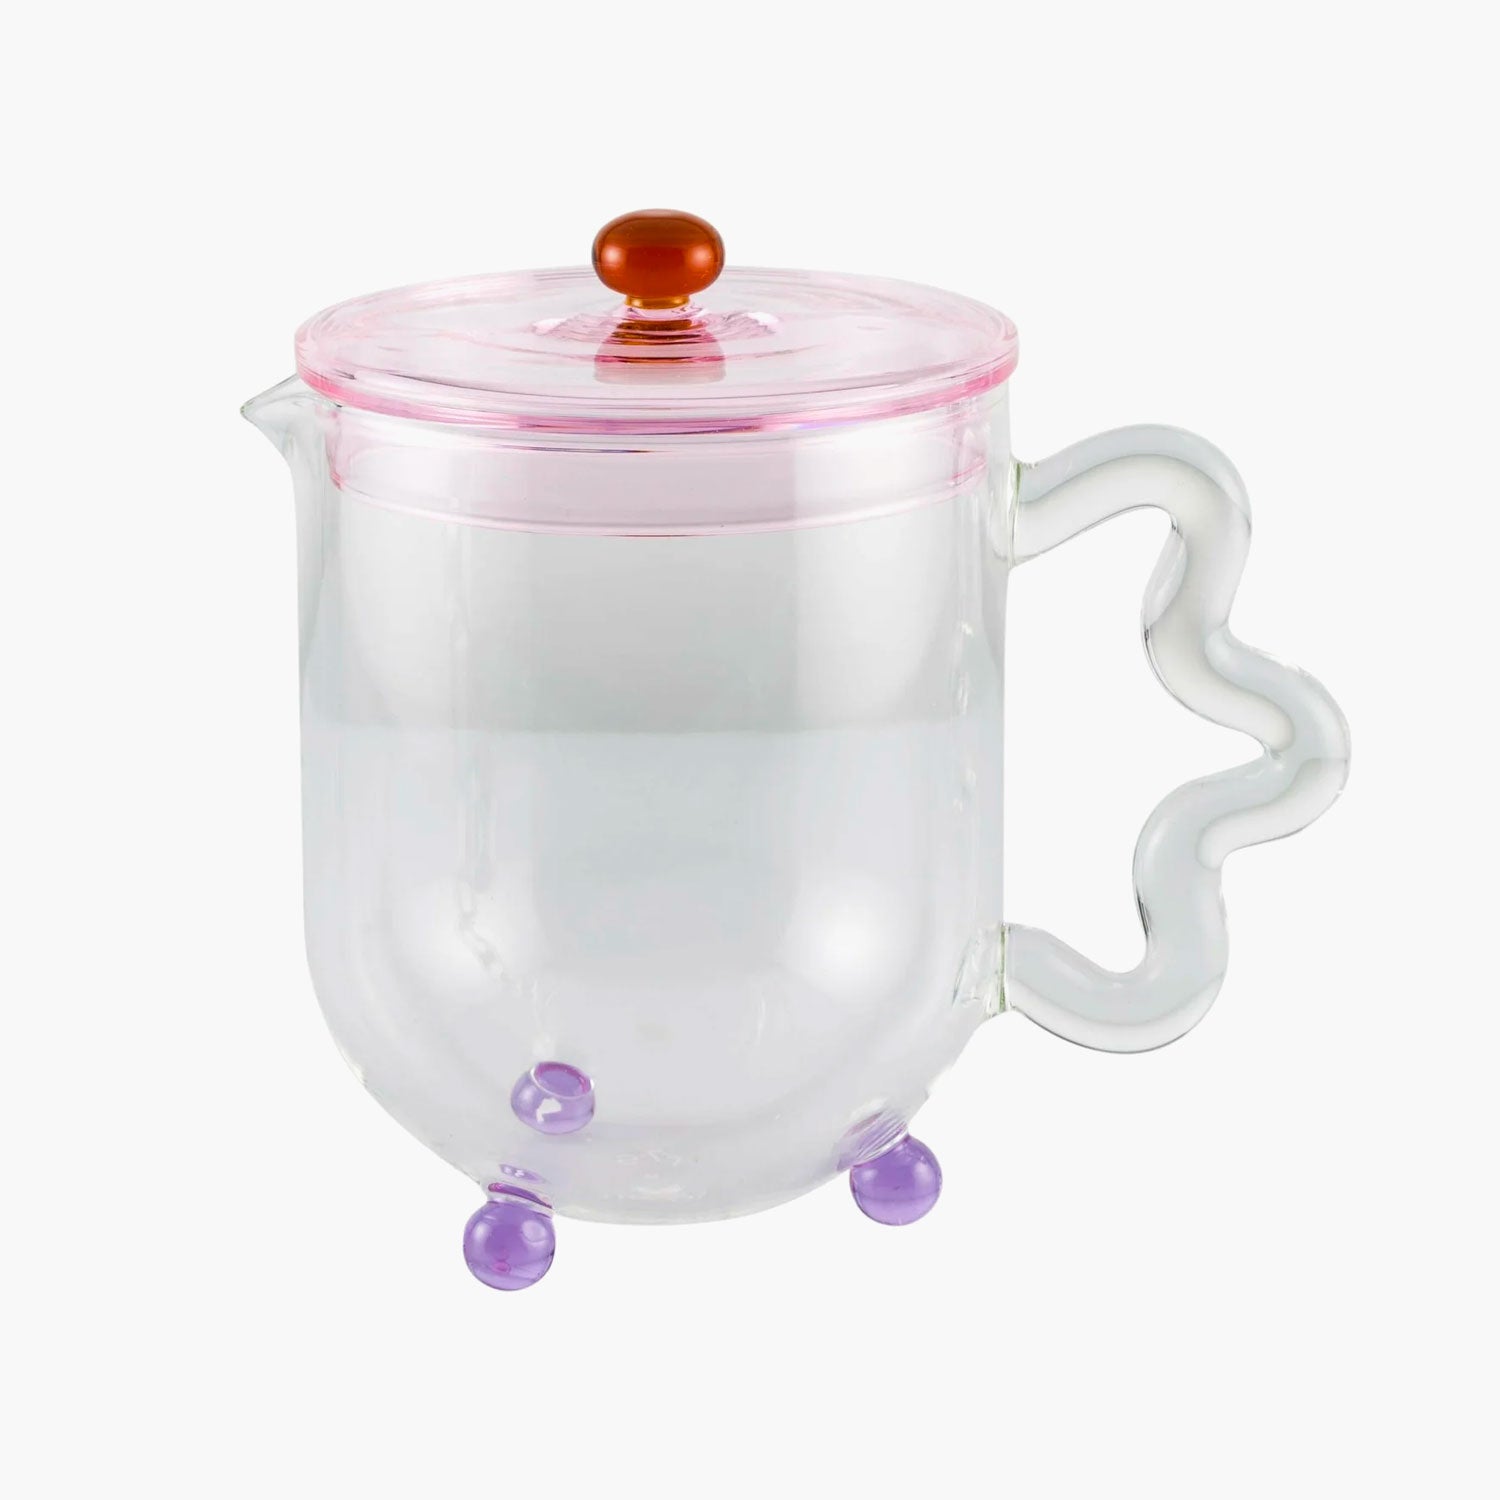 Bloom Teapot